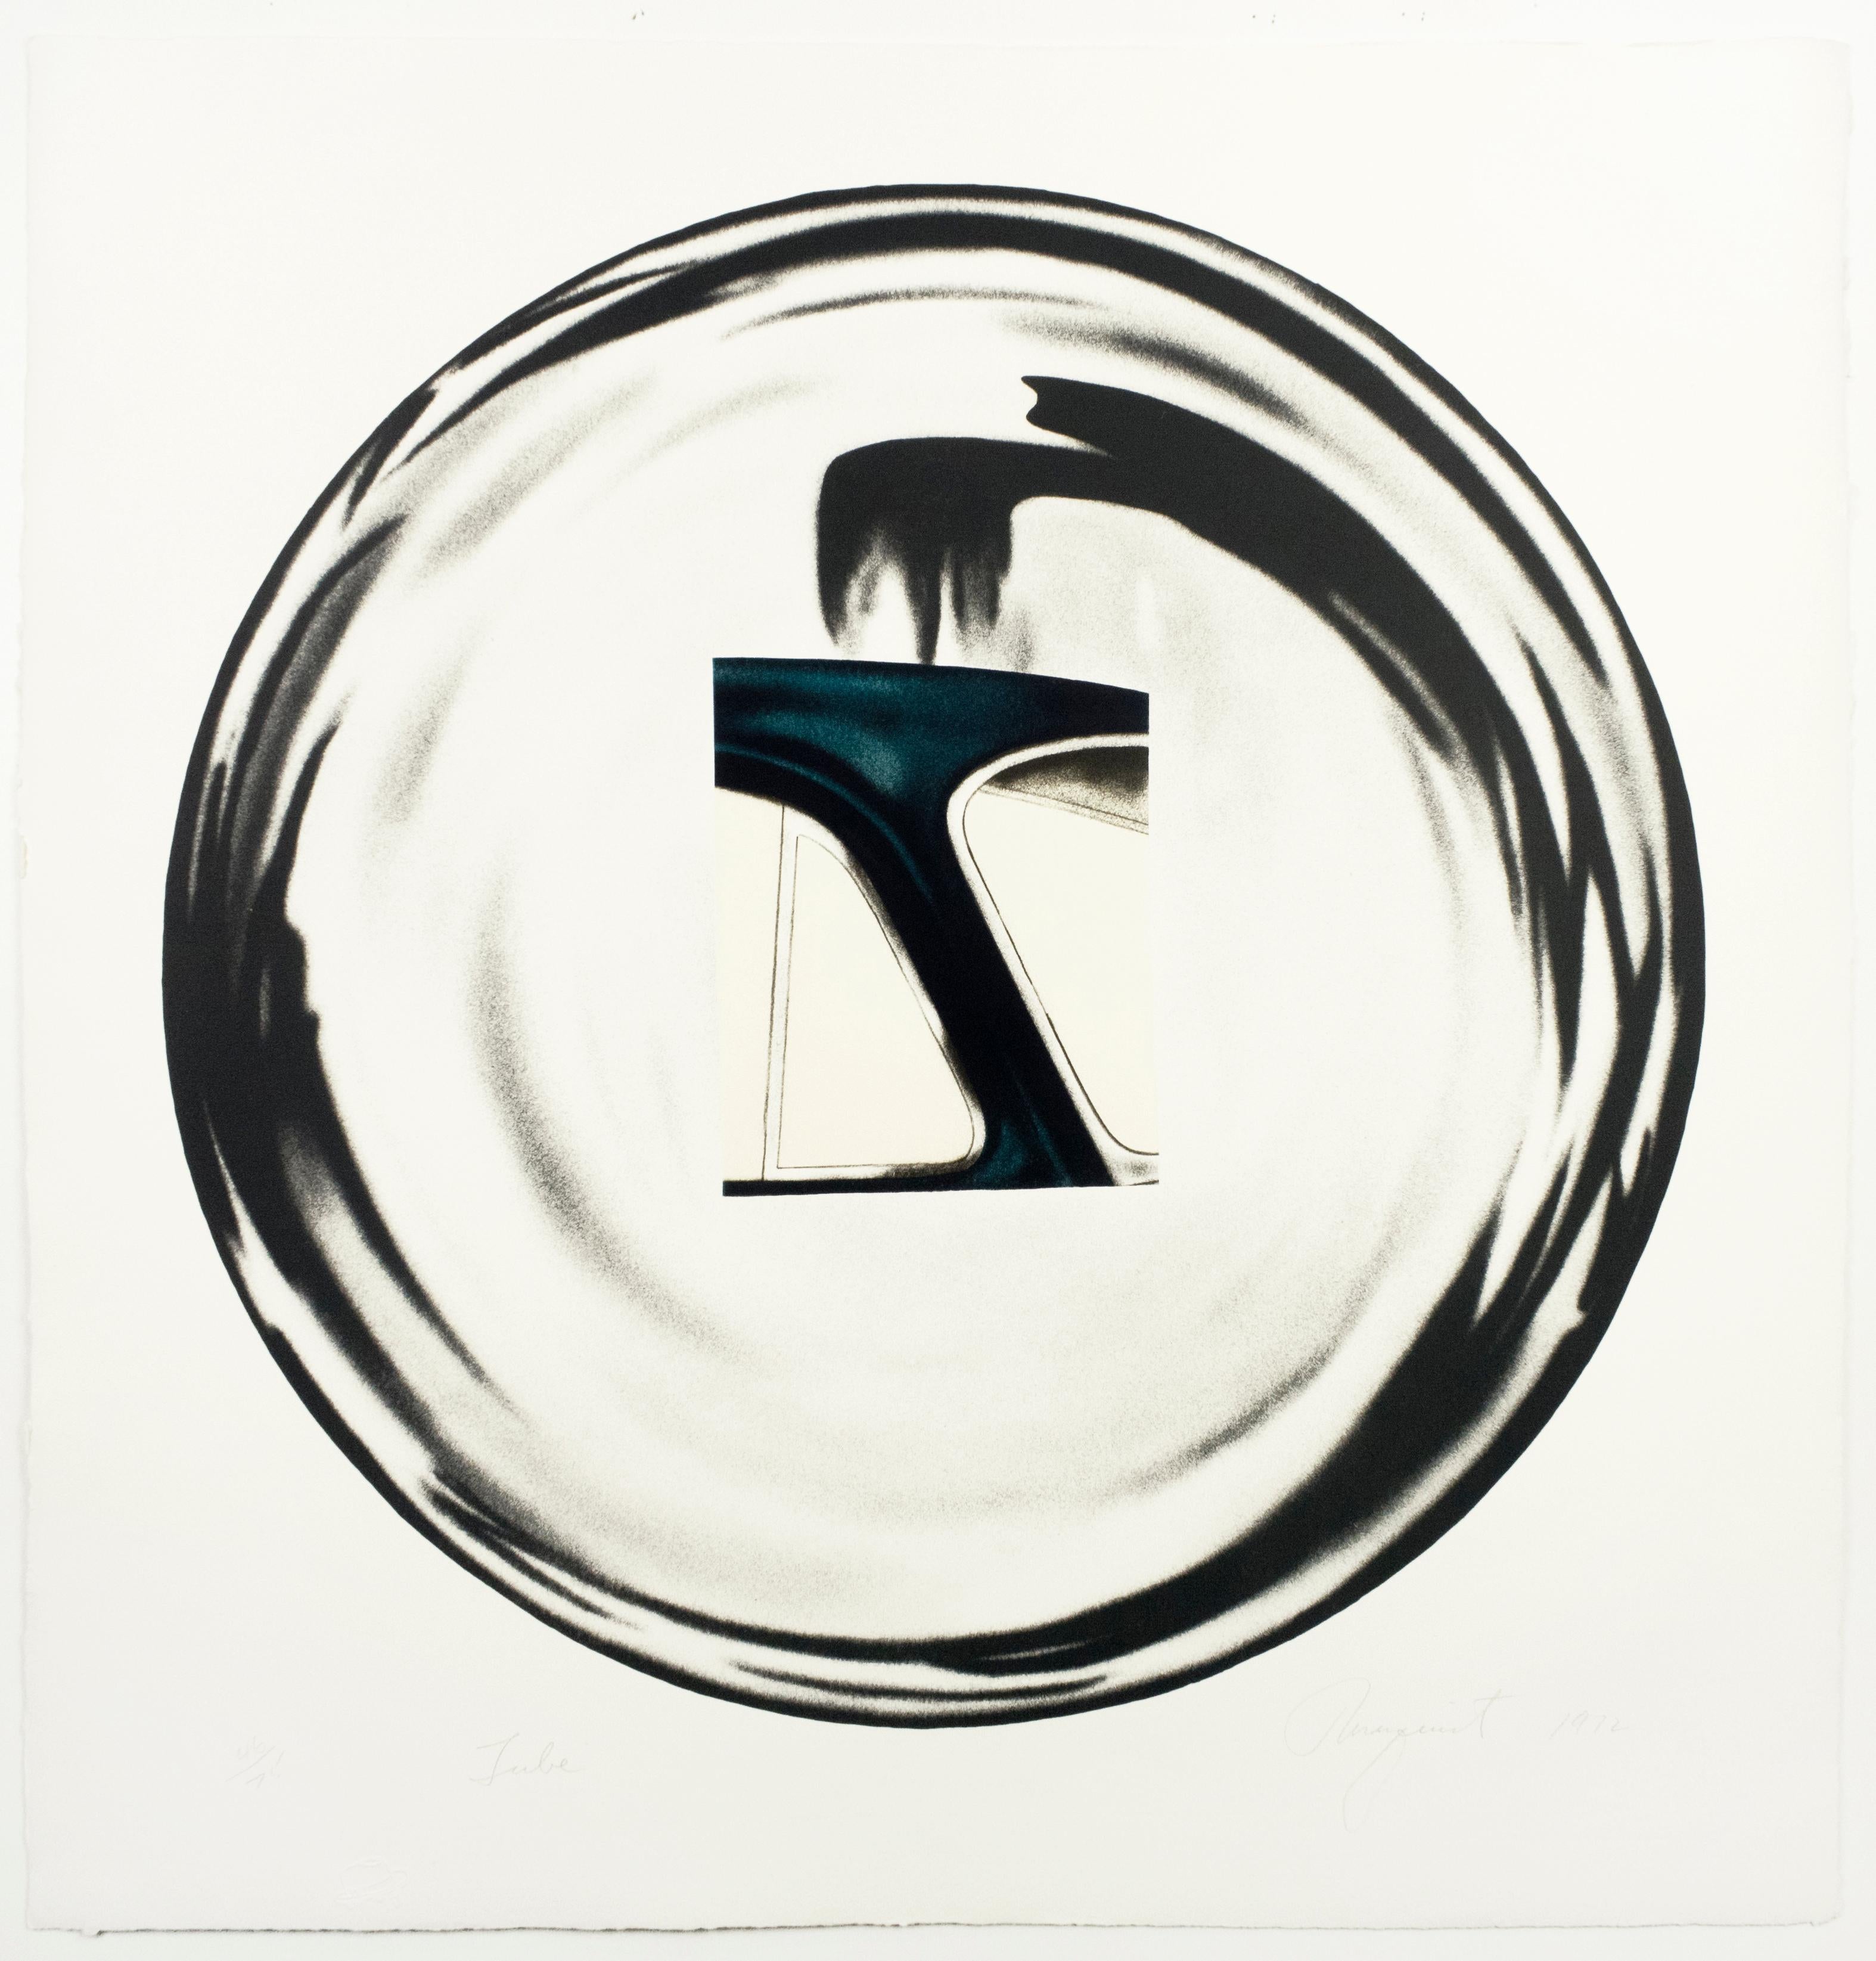 Tube James Rosenquist Black and white abstract Pop art chrome based on painting